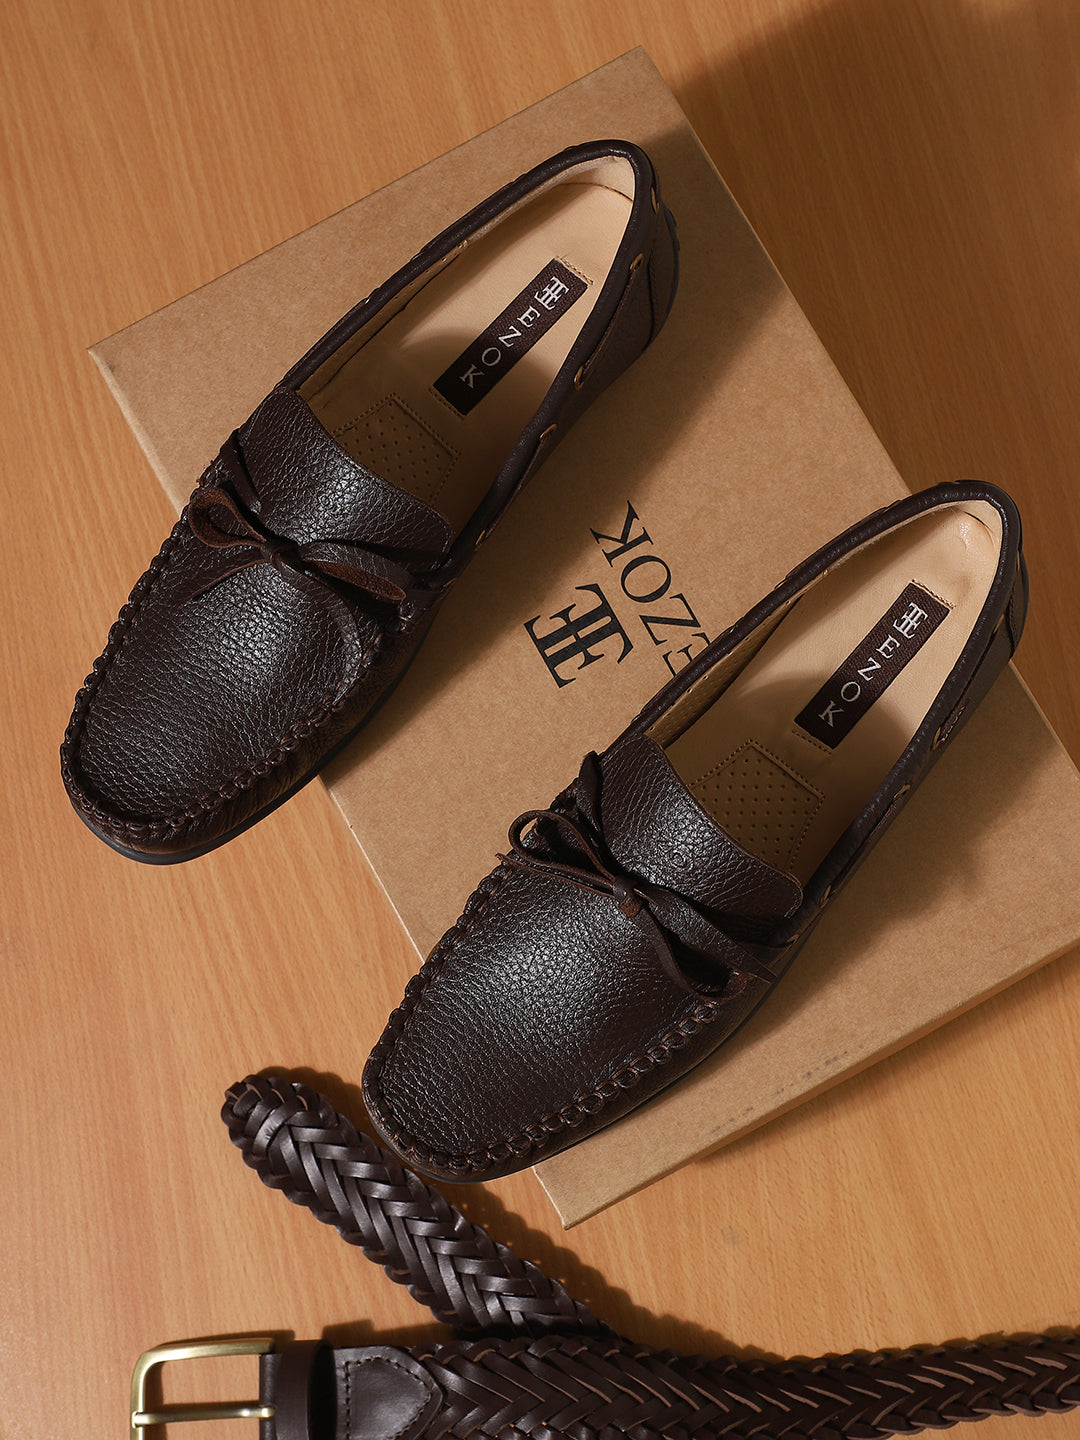 Ezok Men Moda 2060 Brown Leather Moccasin Shoes